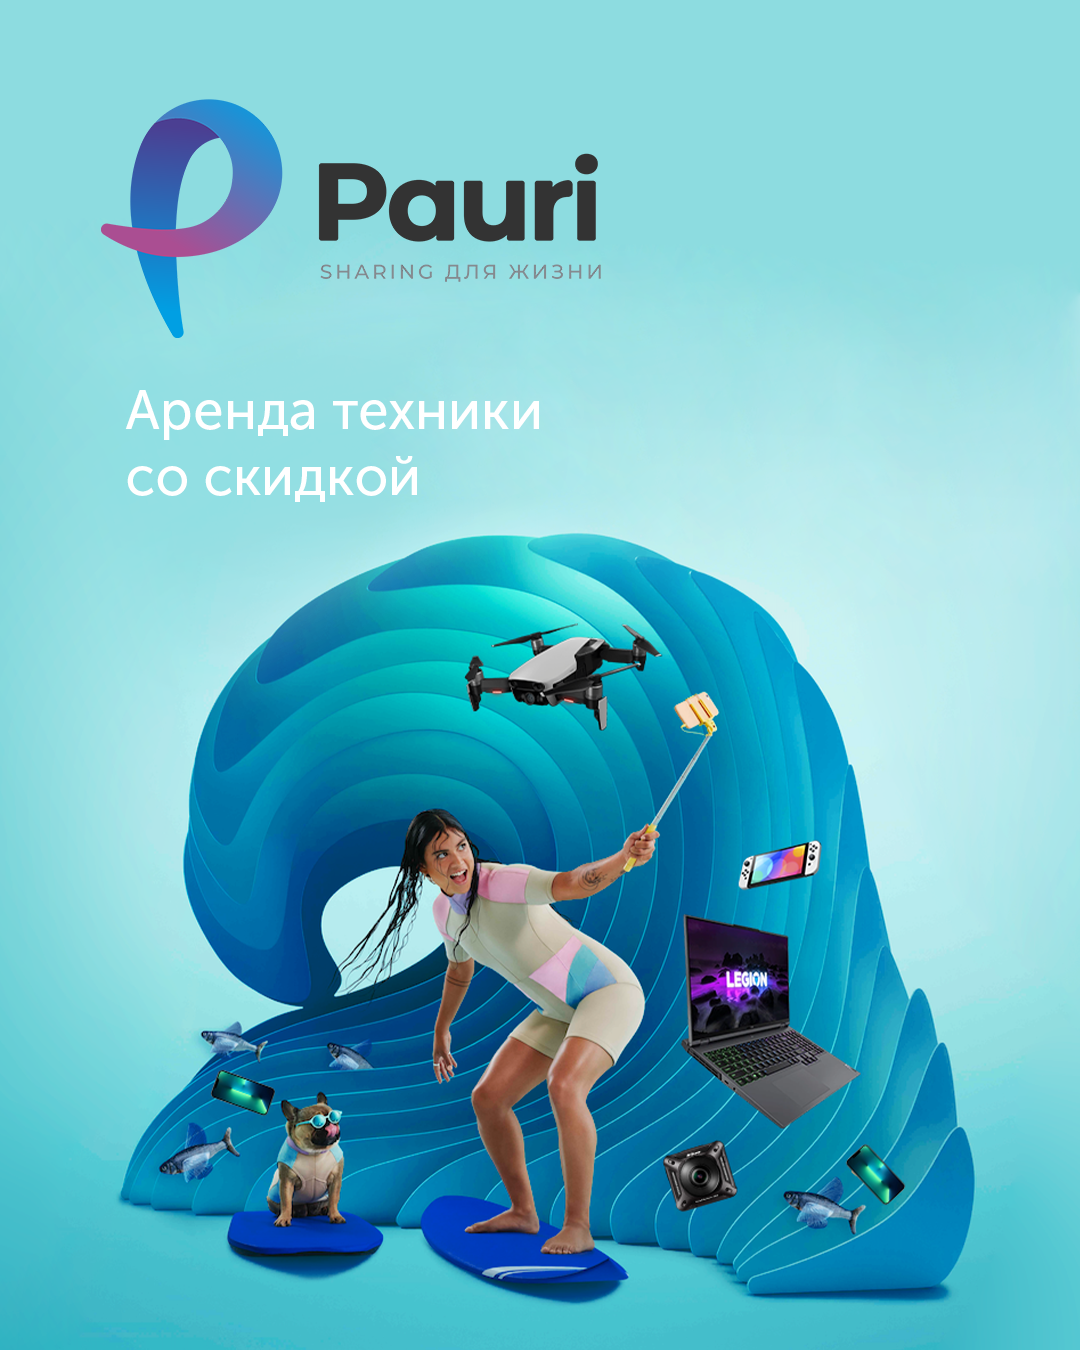 Pauri – сервис аренды техники №1